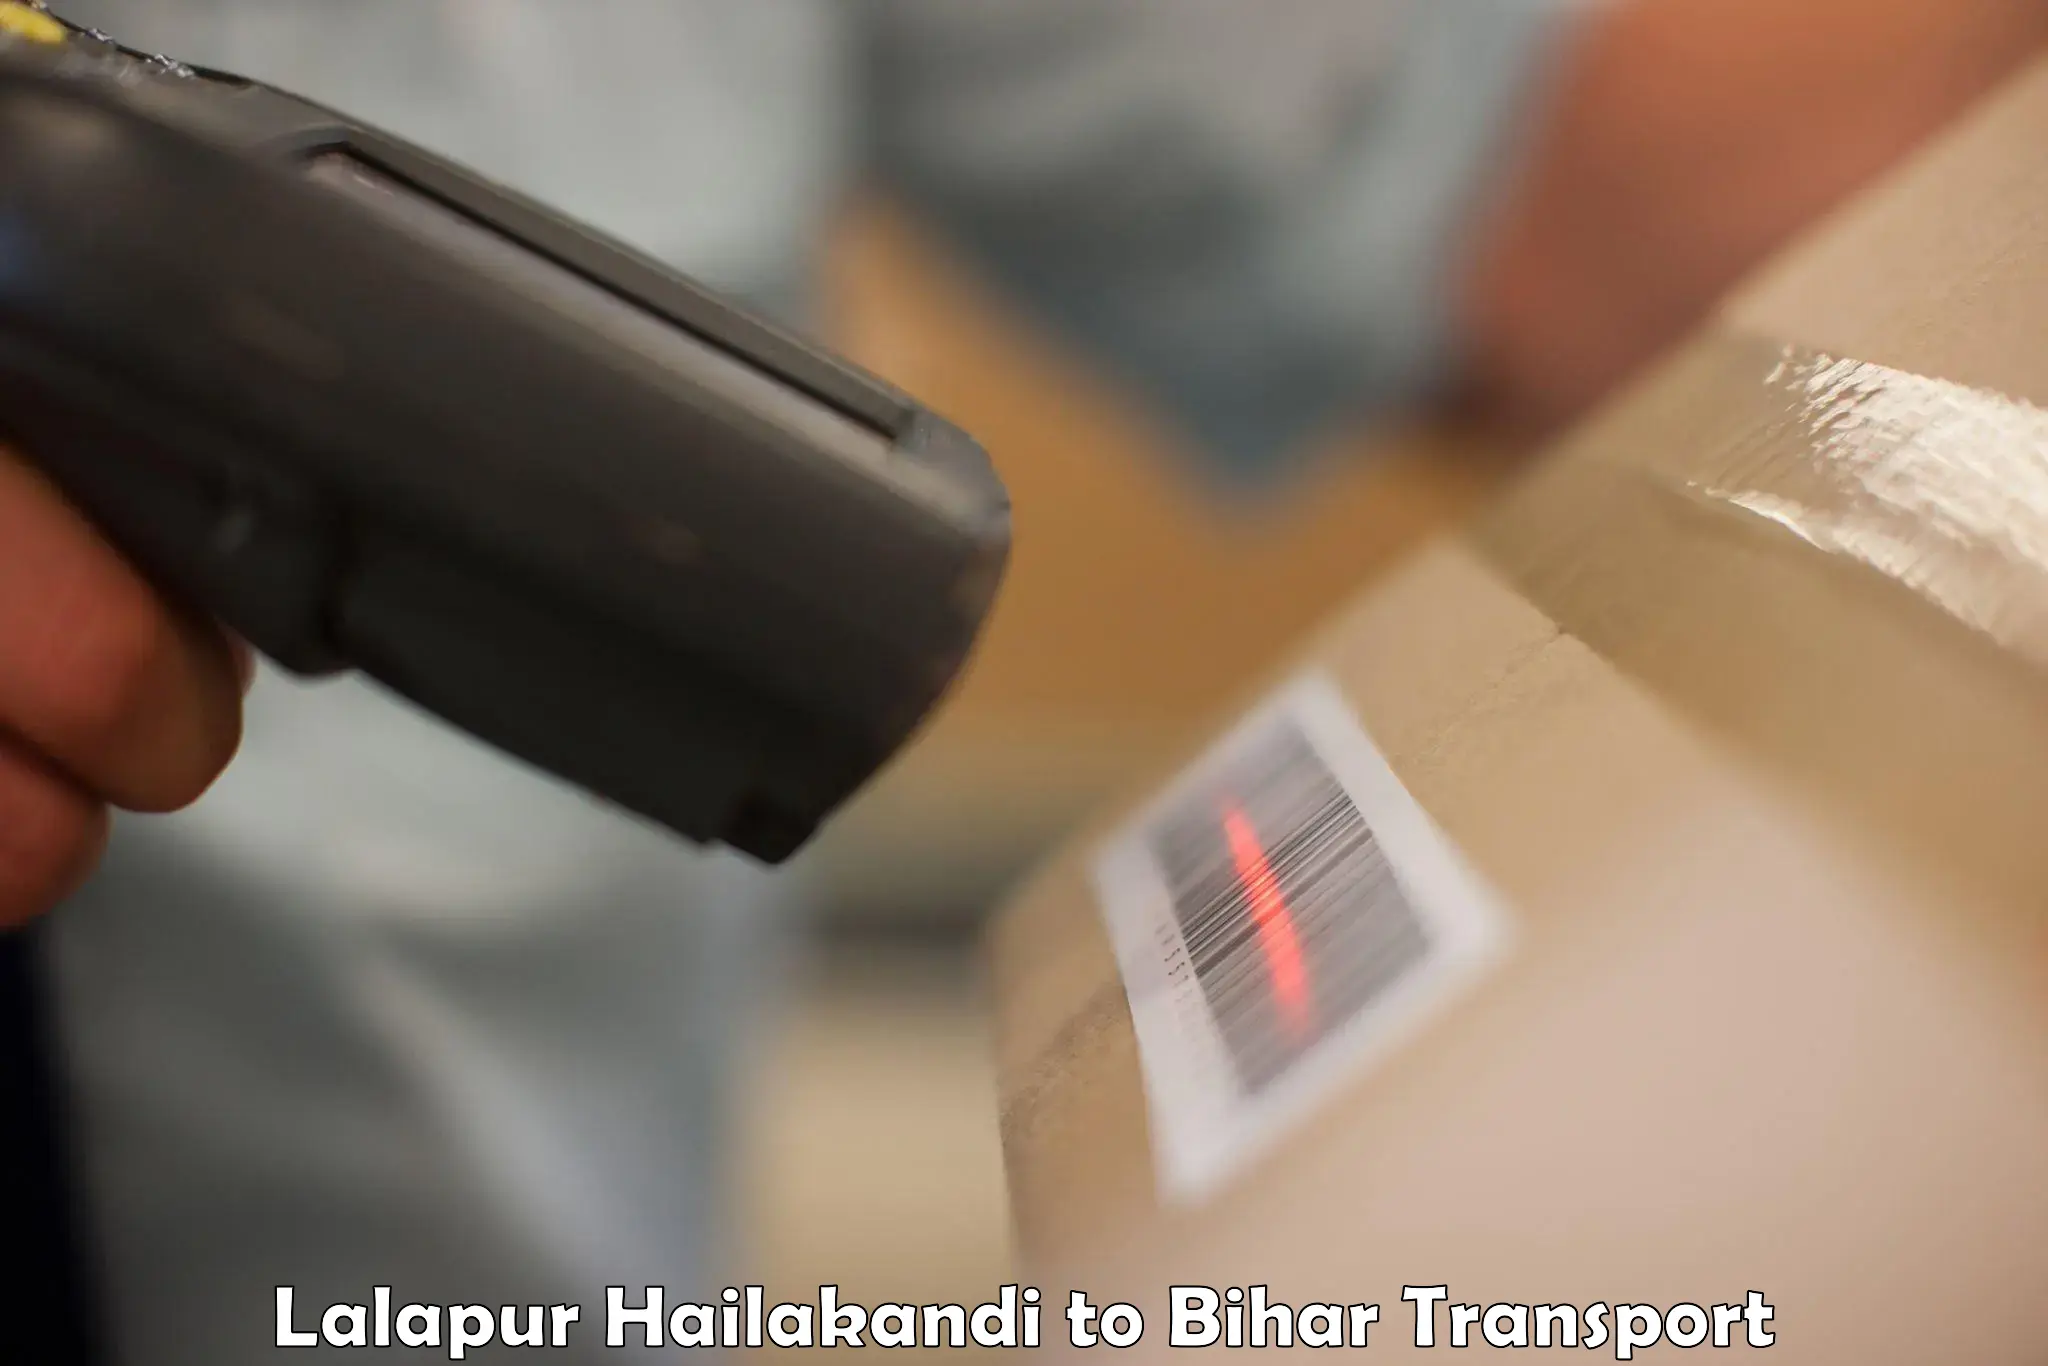 Sending bike to another city Lalapur Hailakandi to Aurangabad Bihar